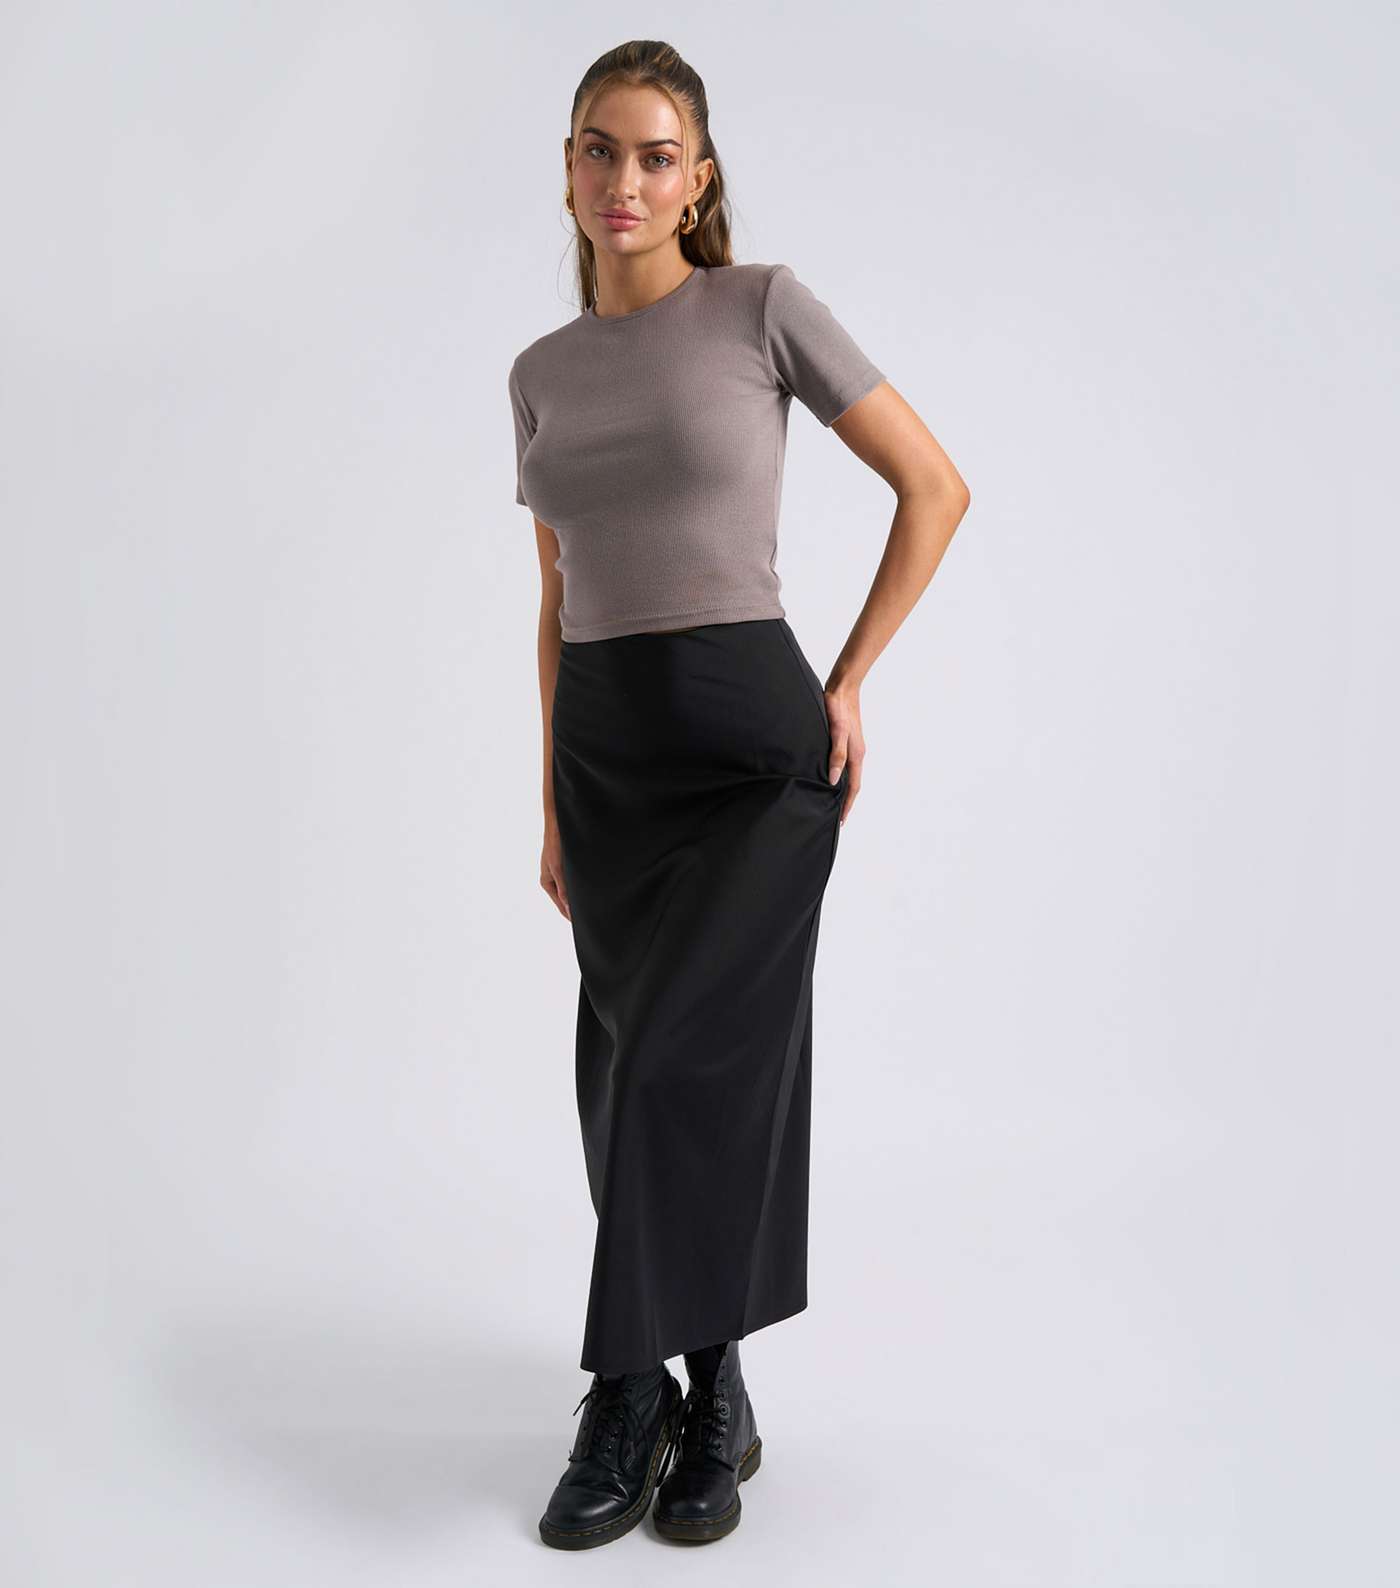 Urban Bliss Black Satin Maxi Skirt | New Look